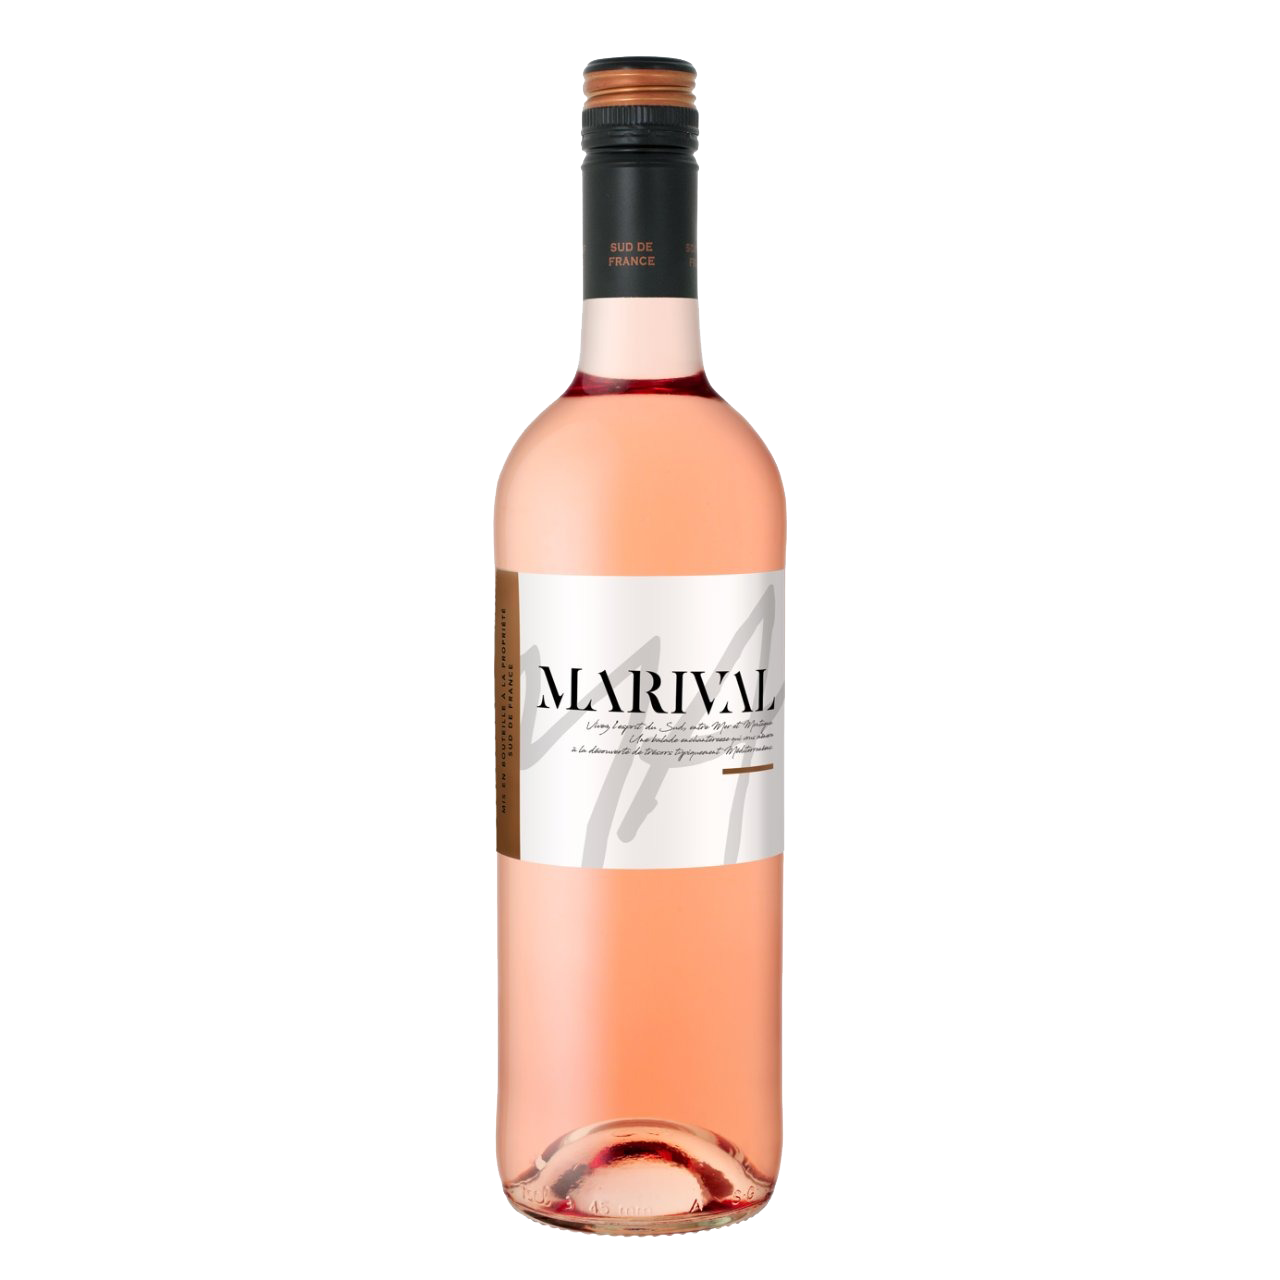 Marival Franse droge rosé (Leeftijdscontrole ook bij levering)